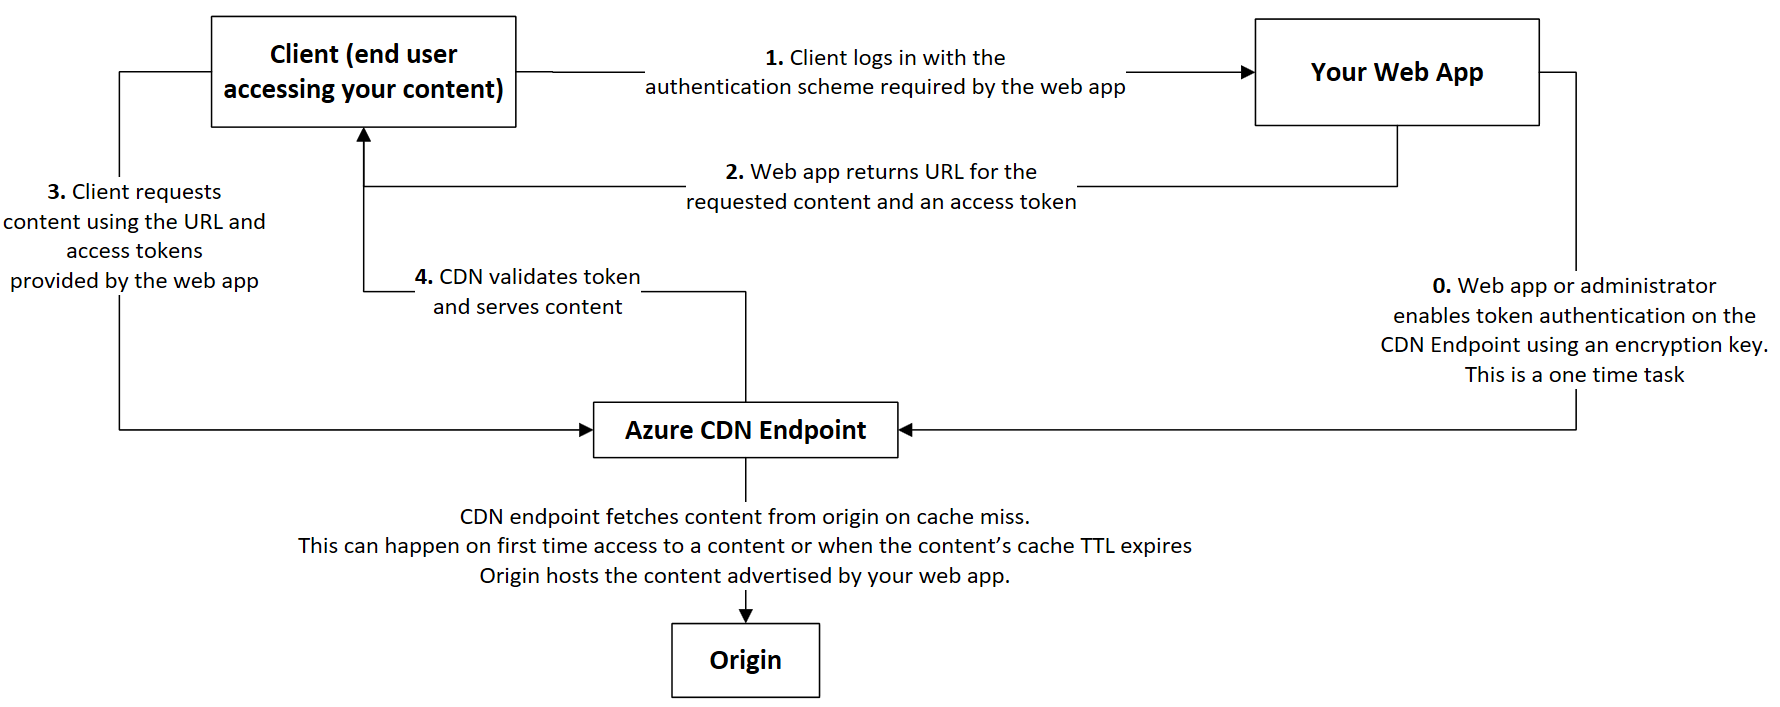 CDN token authentication workflow